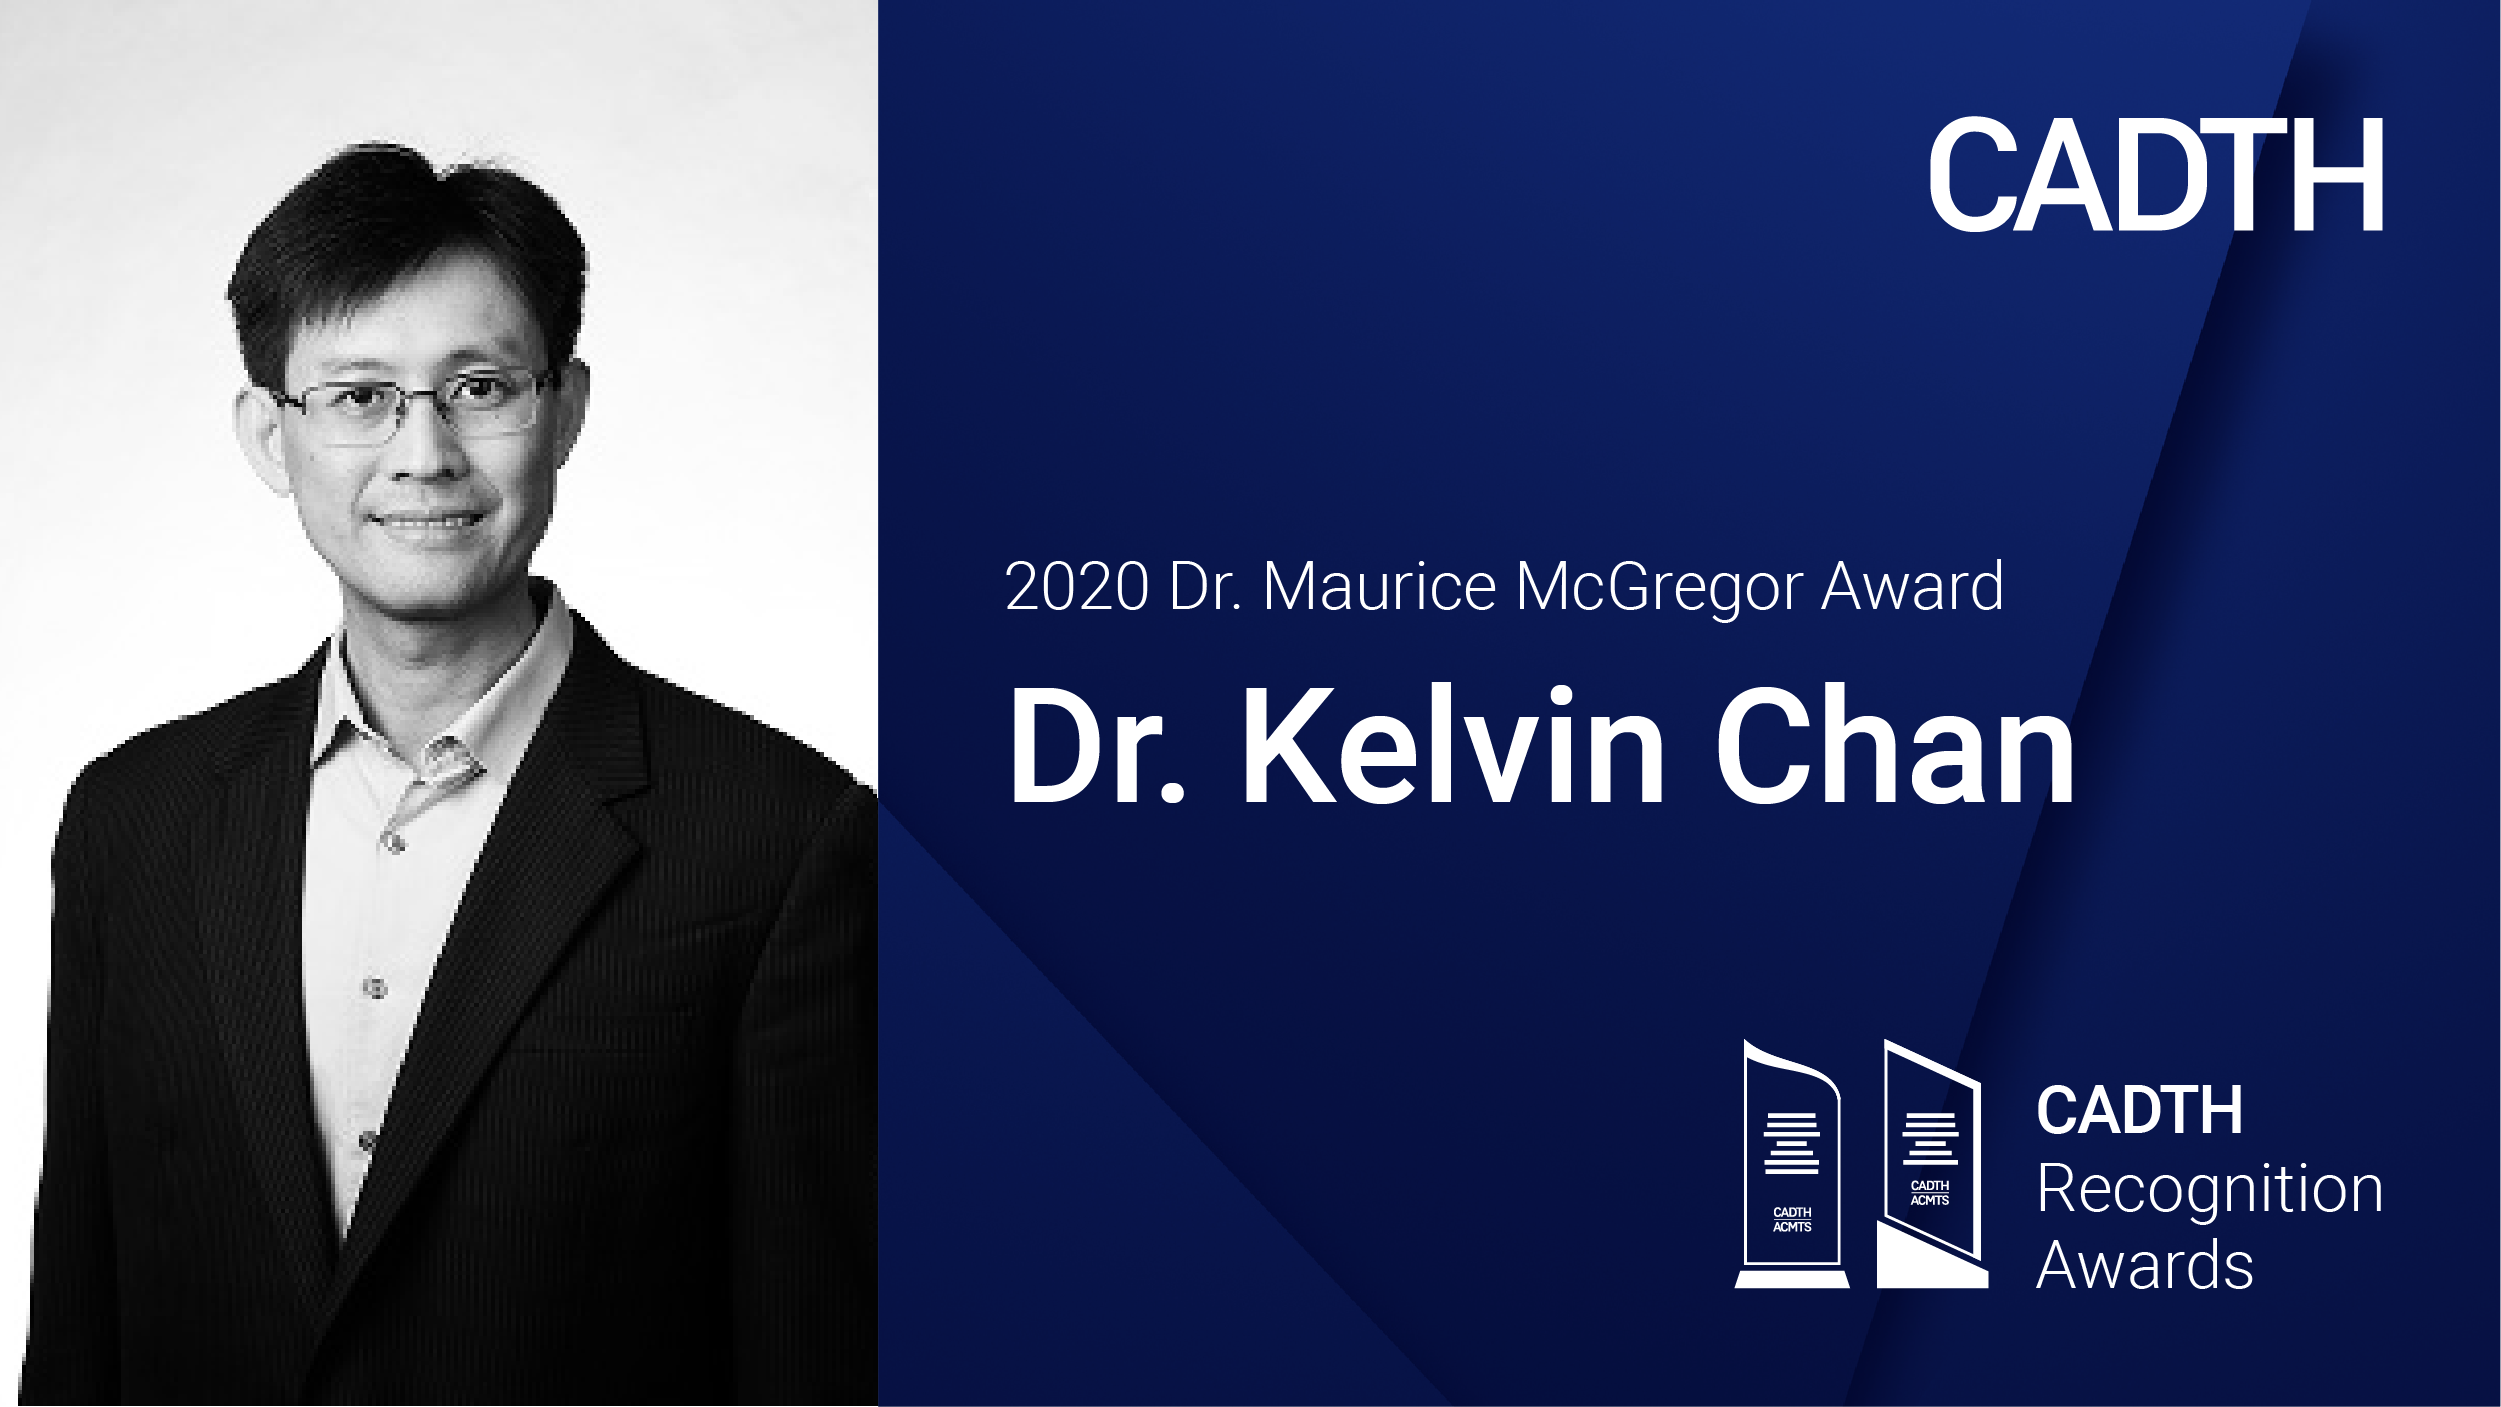 Dr. Maurice McGregor Award award winner for 2019 is Dr. Kelvin Chan